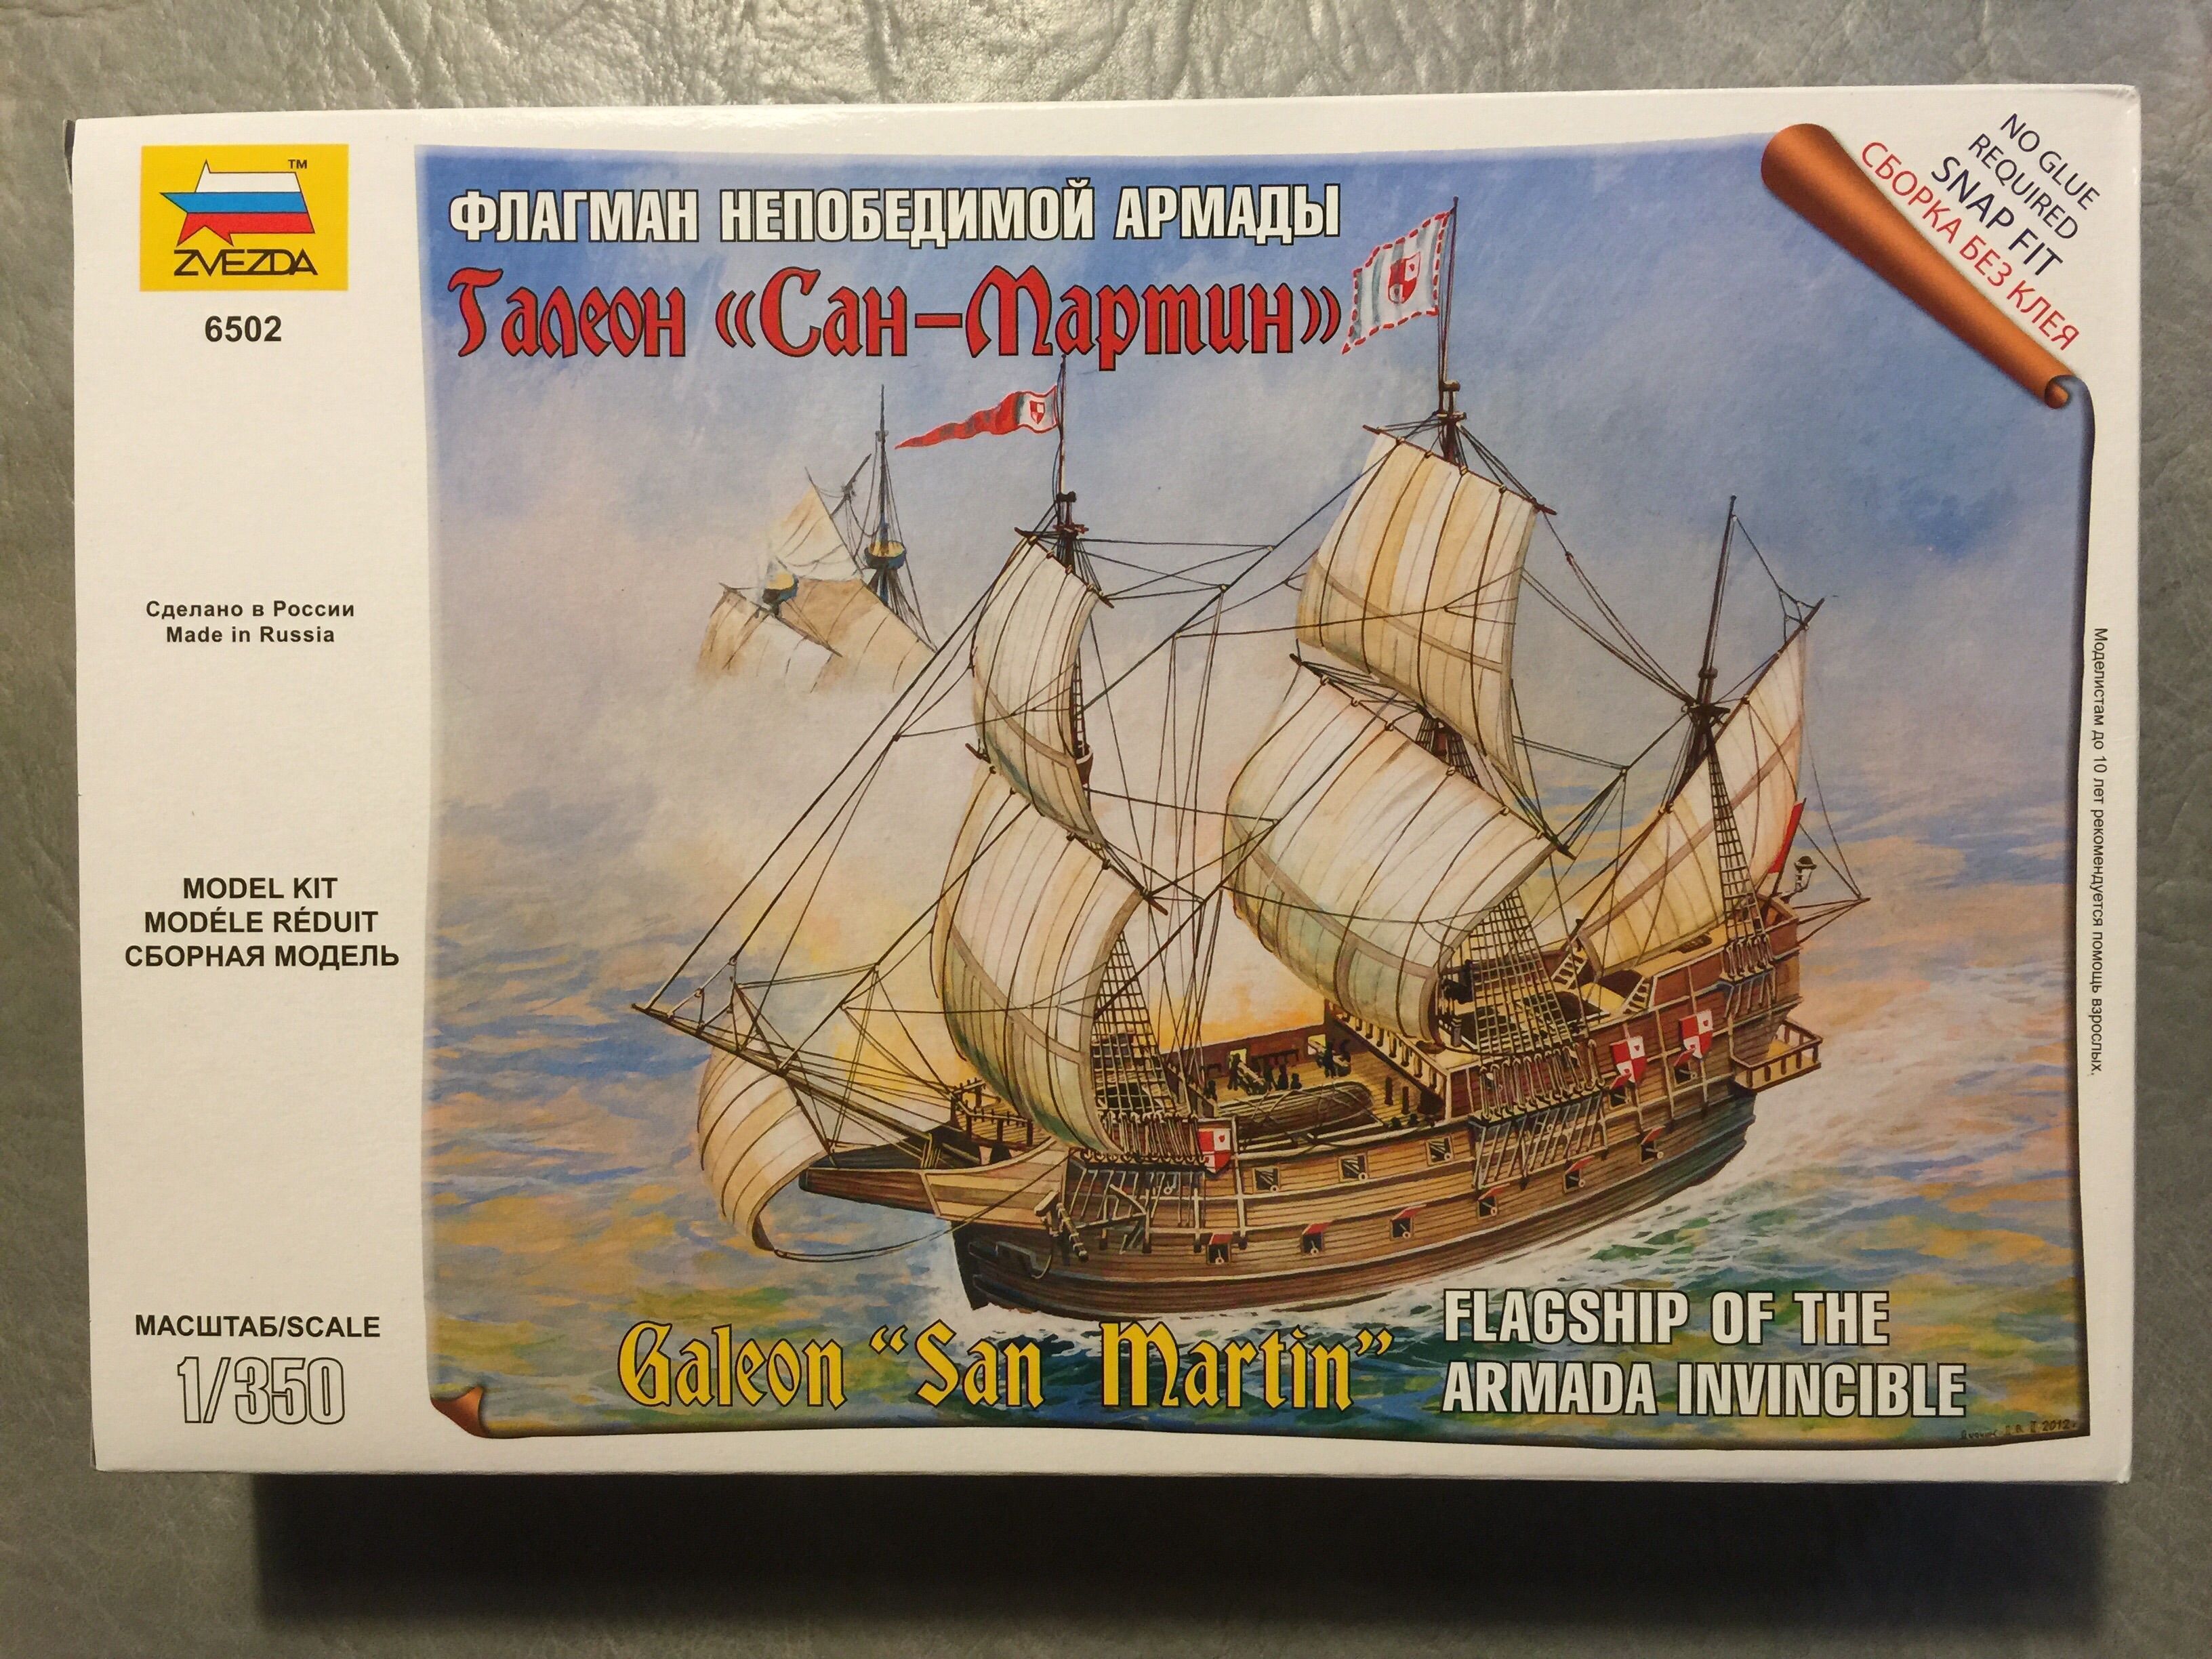 Galeon "San Martin": Flagship of the Armada Invincible